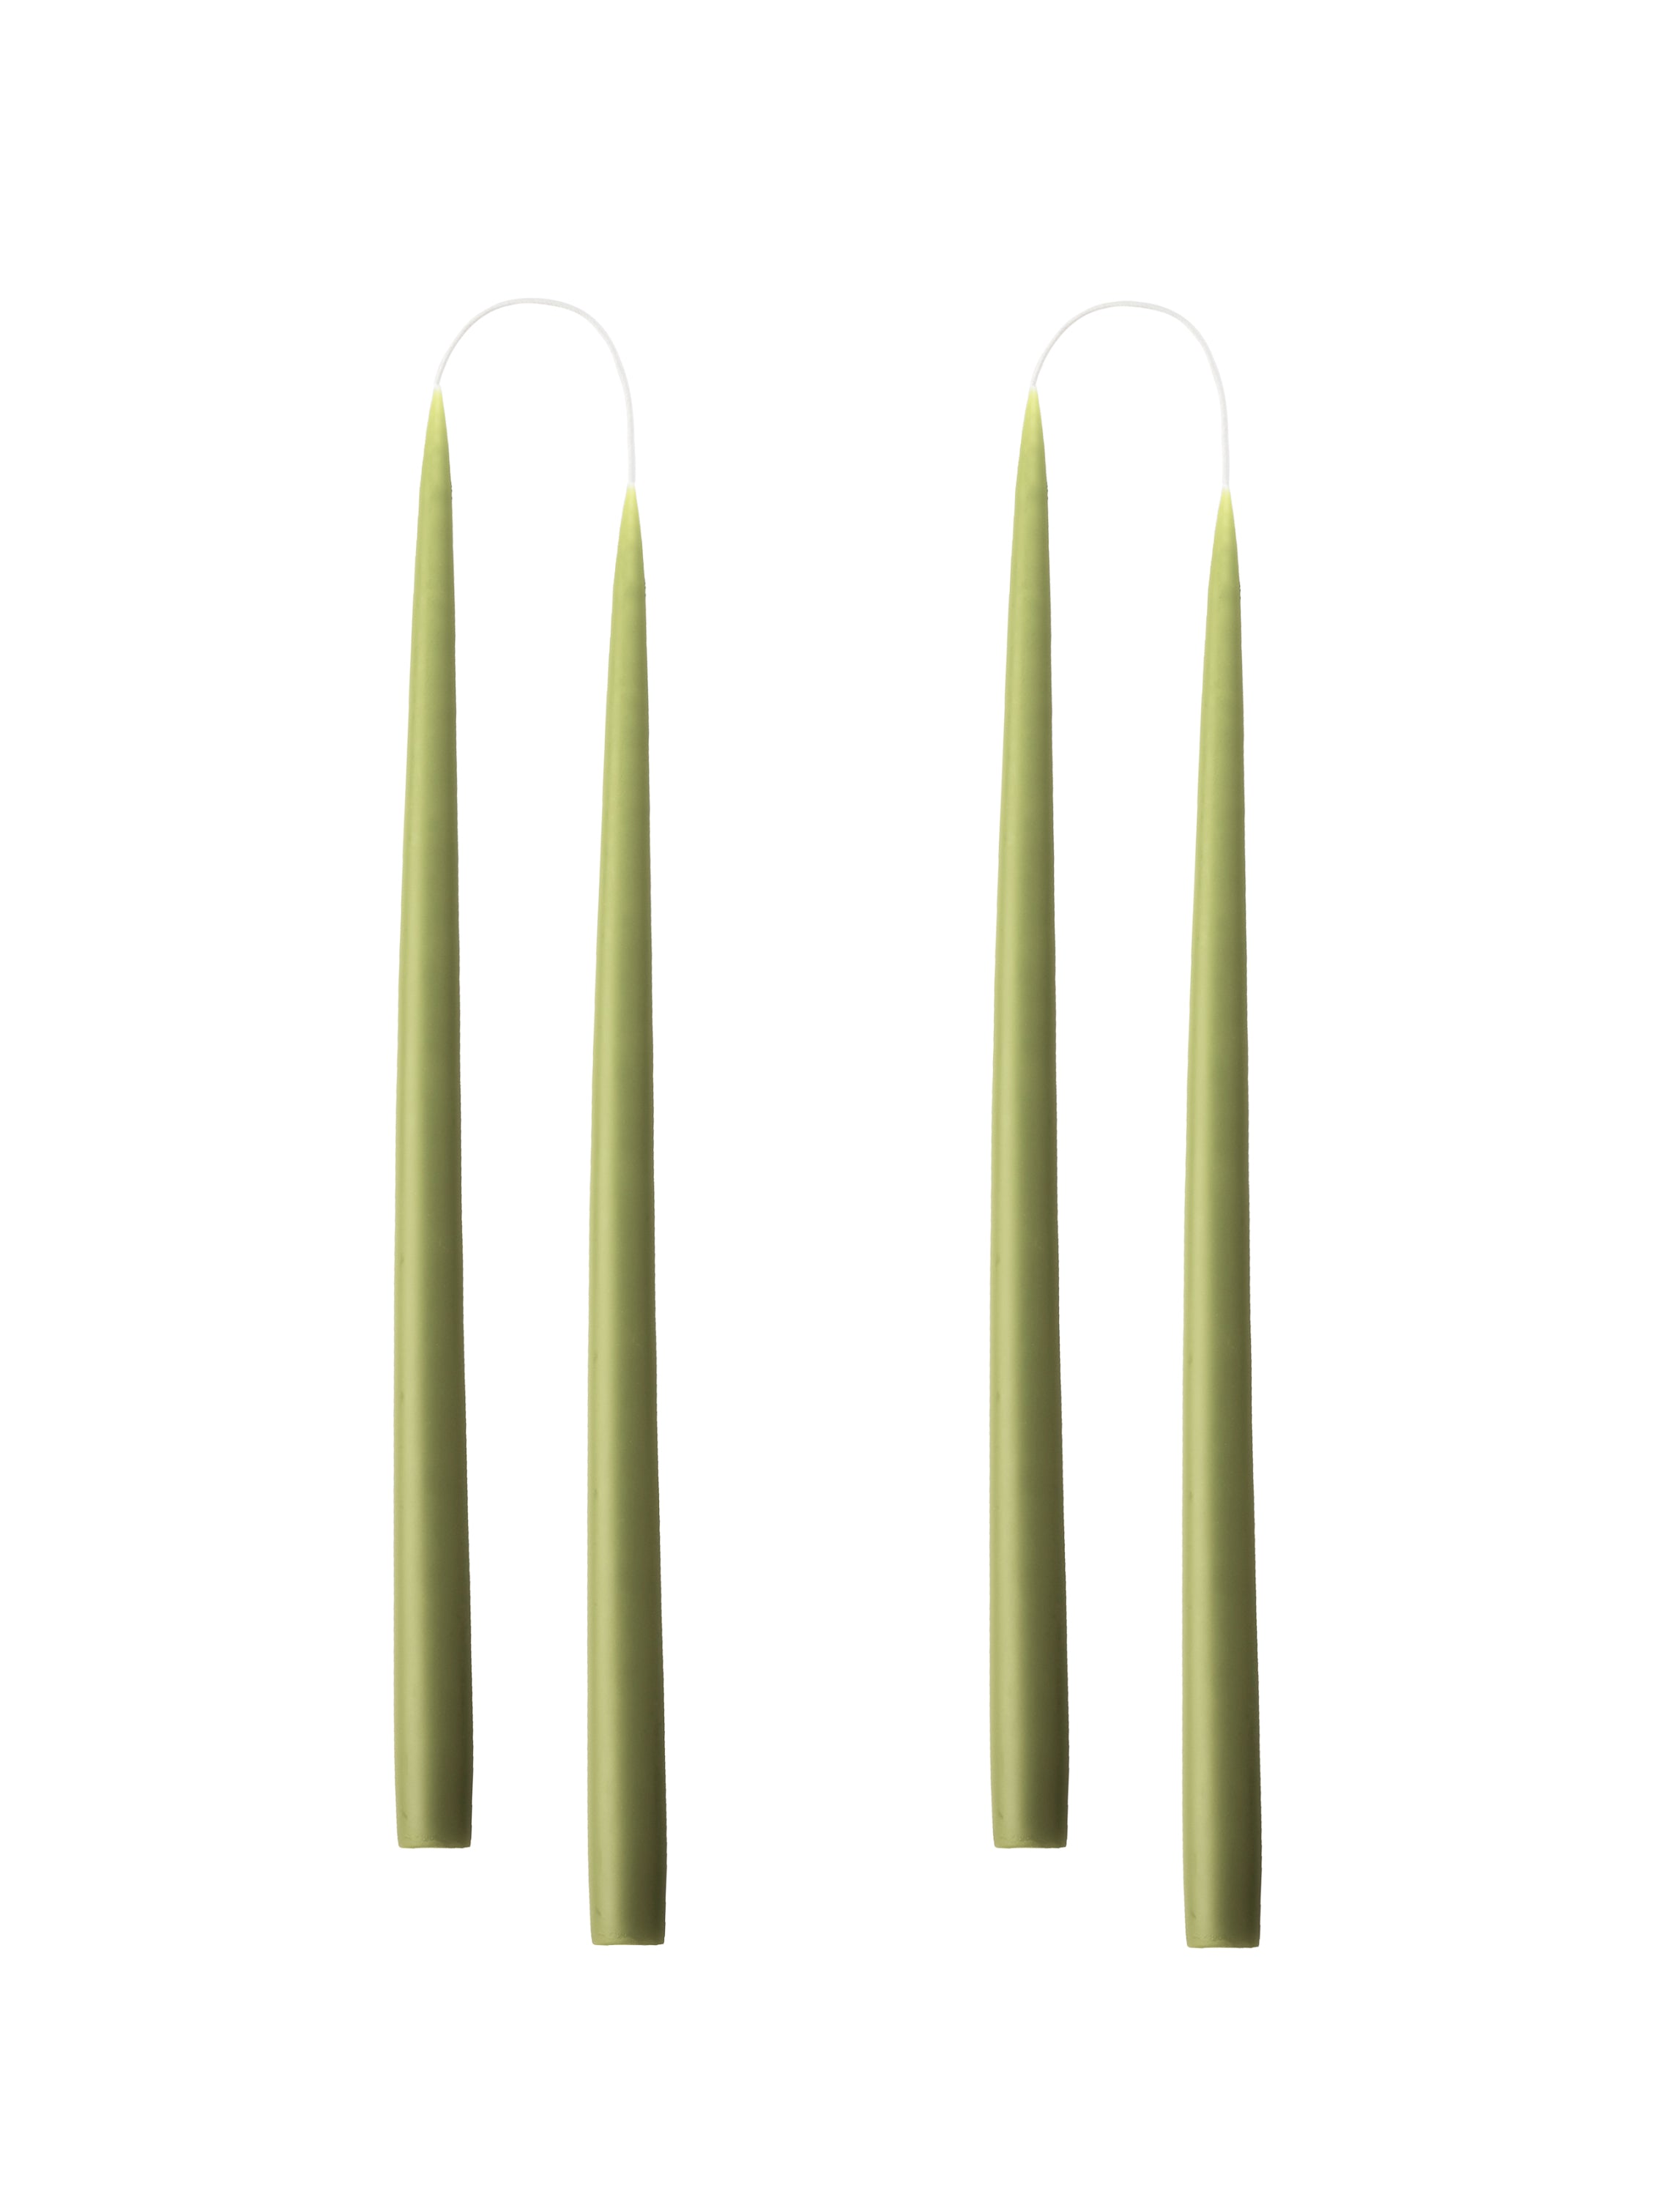 2 Kerzen olive - 35 cm x ø 2.2 cm